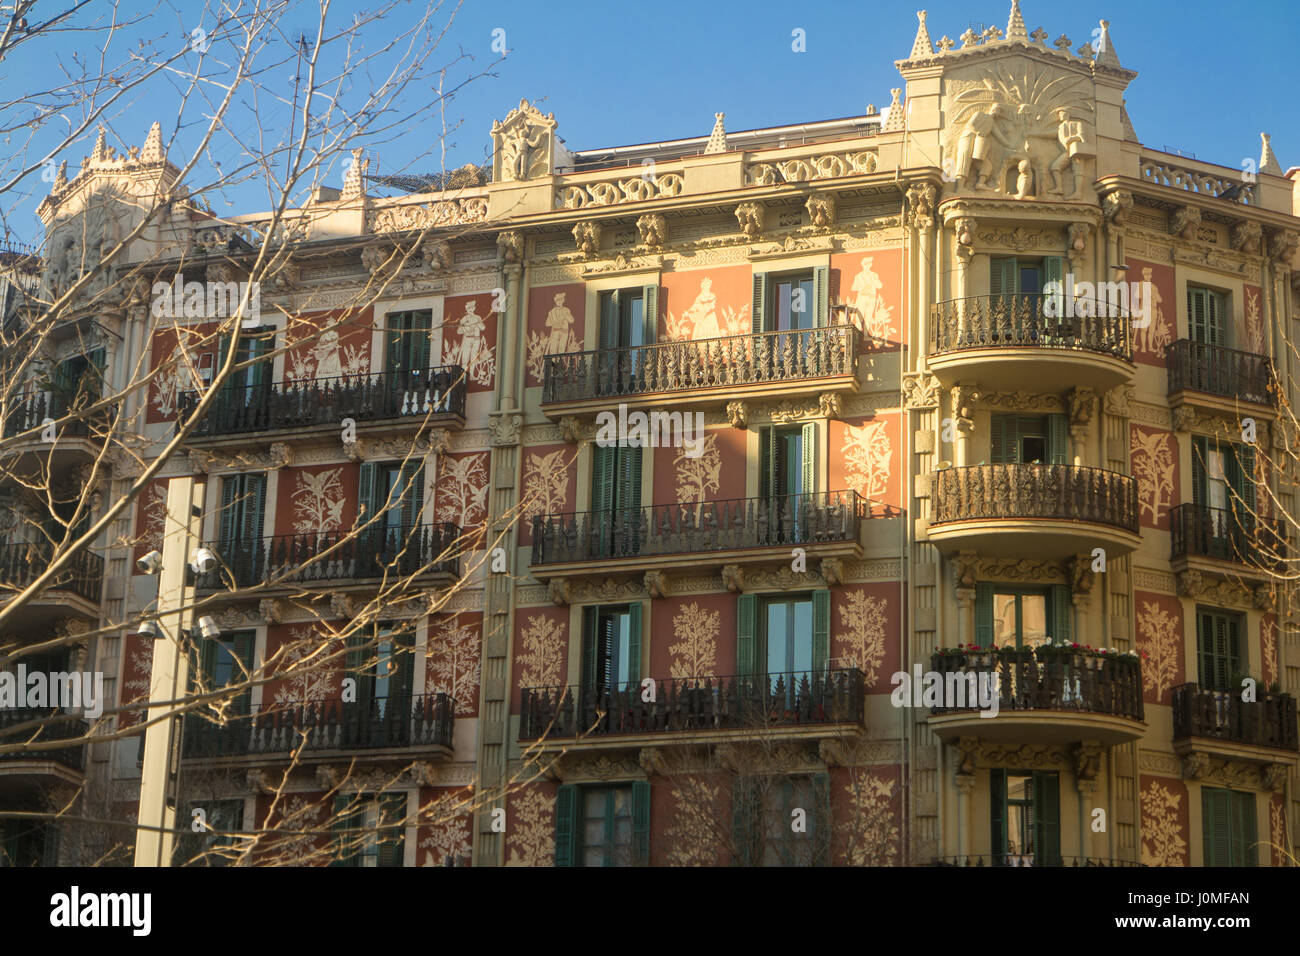 Barcelona heritage building facade Stock Photo - Alamy